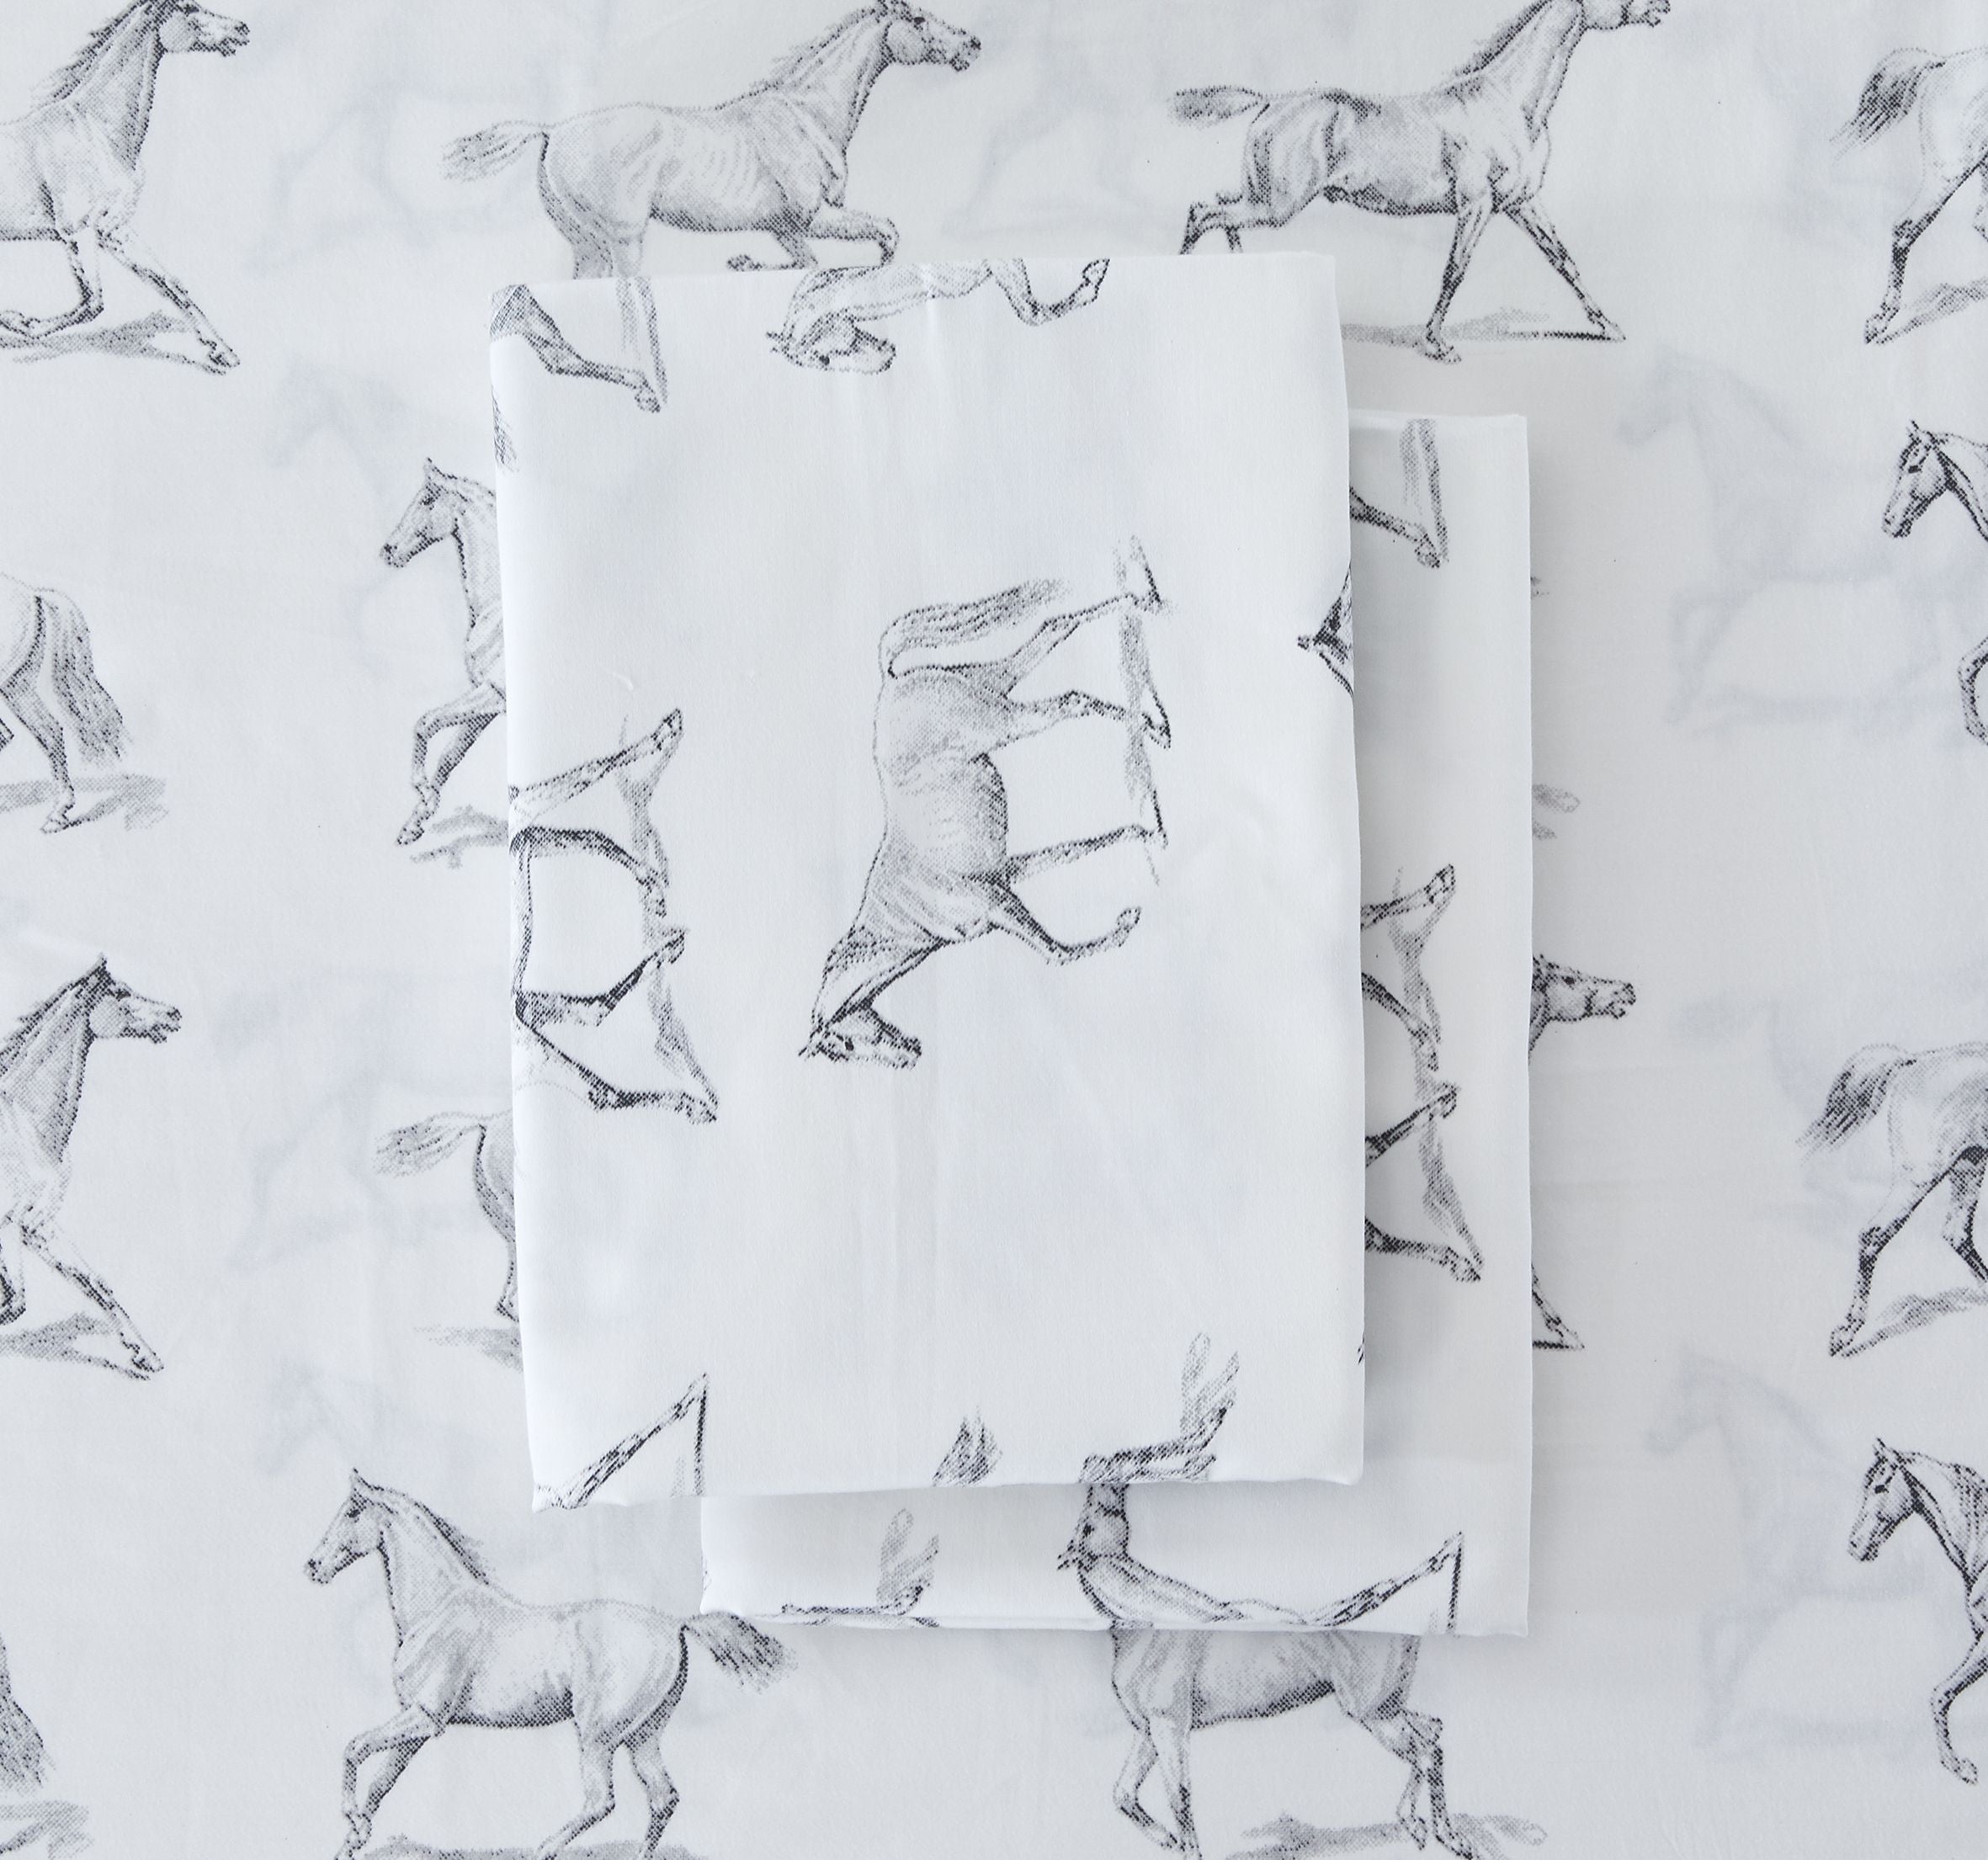 Horse Print Twin Bed Sheets, Set Sheets Horse